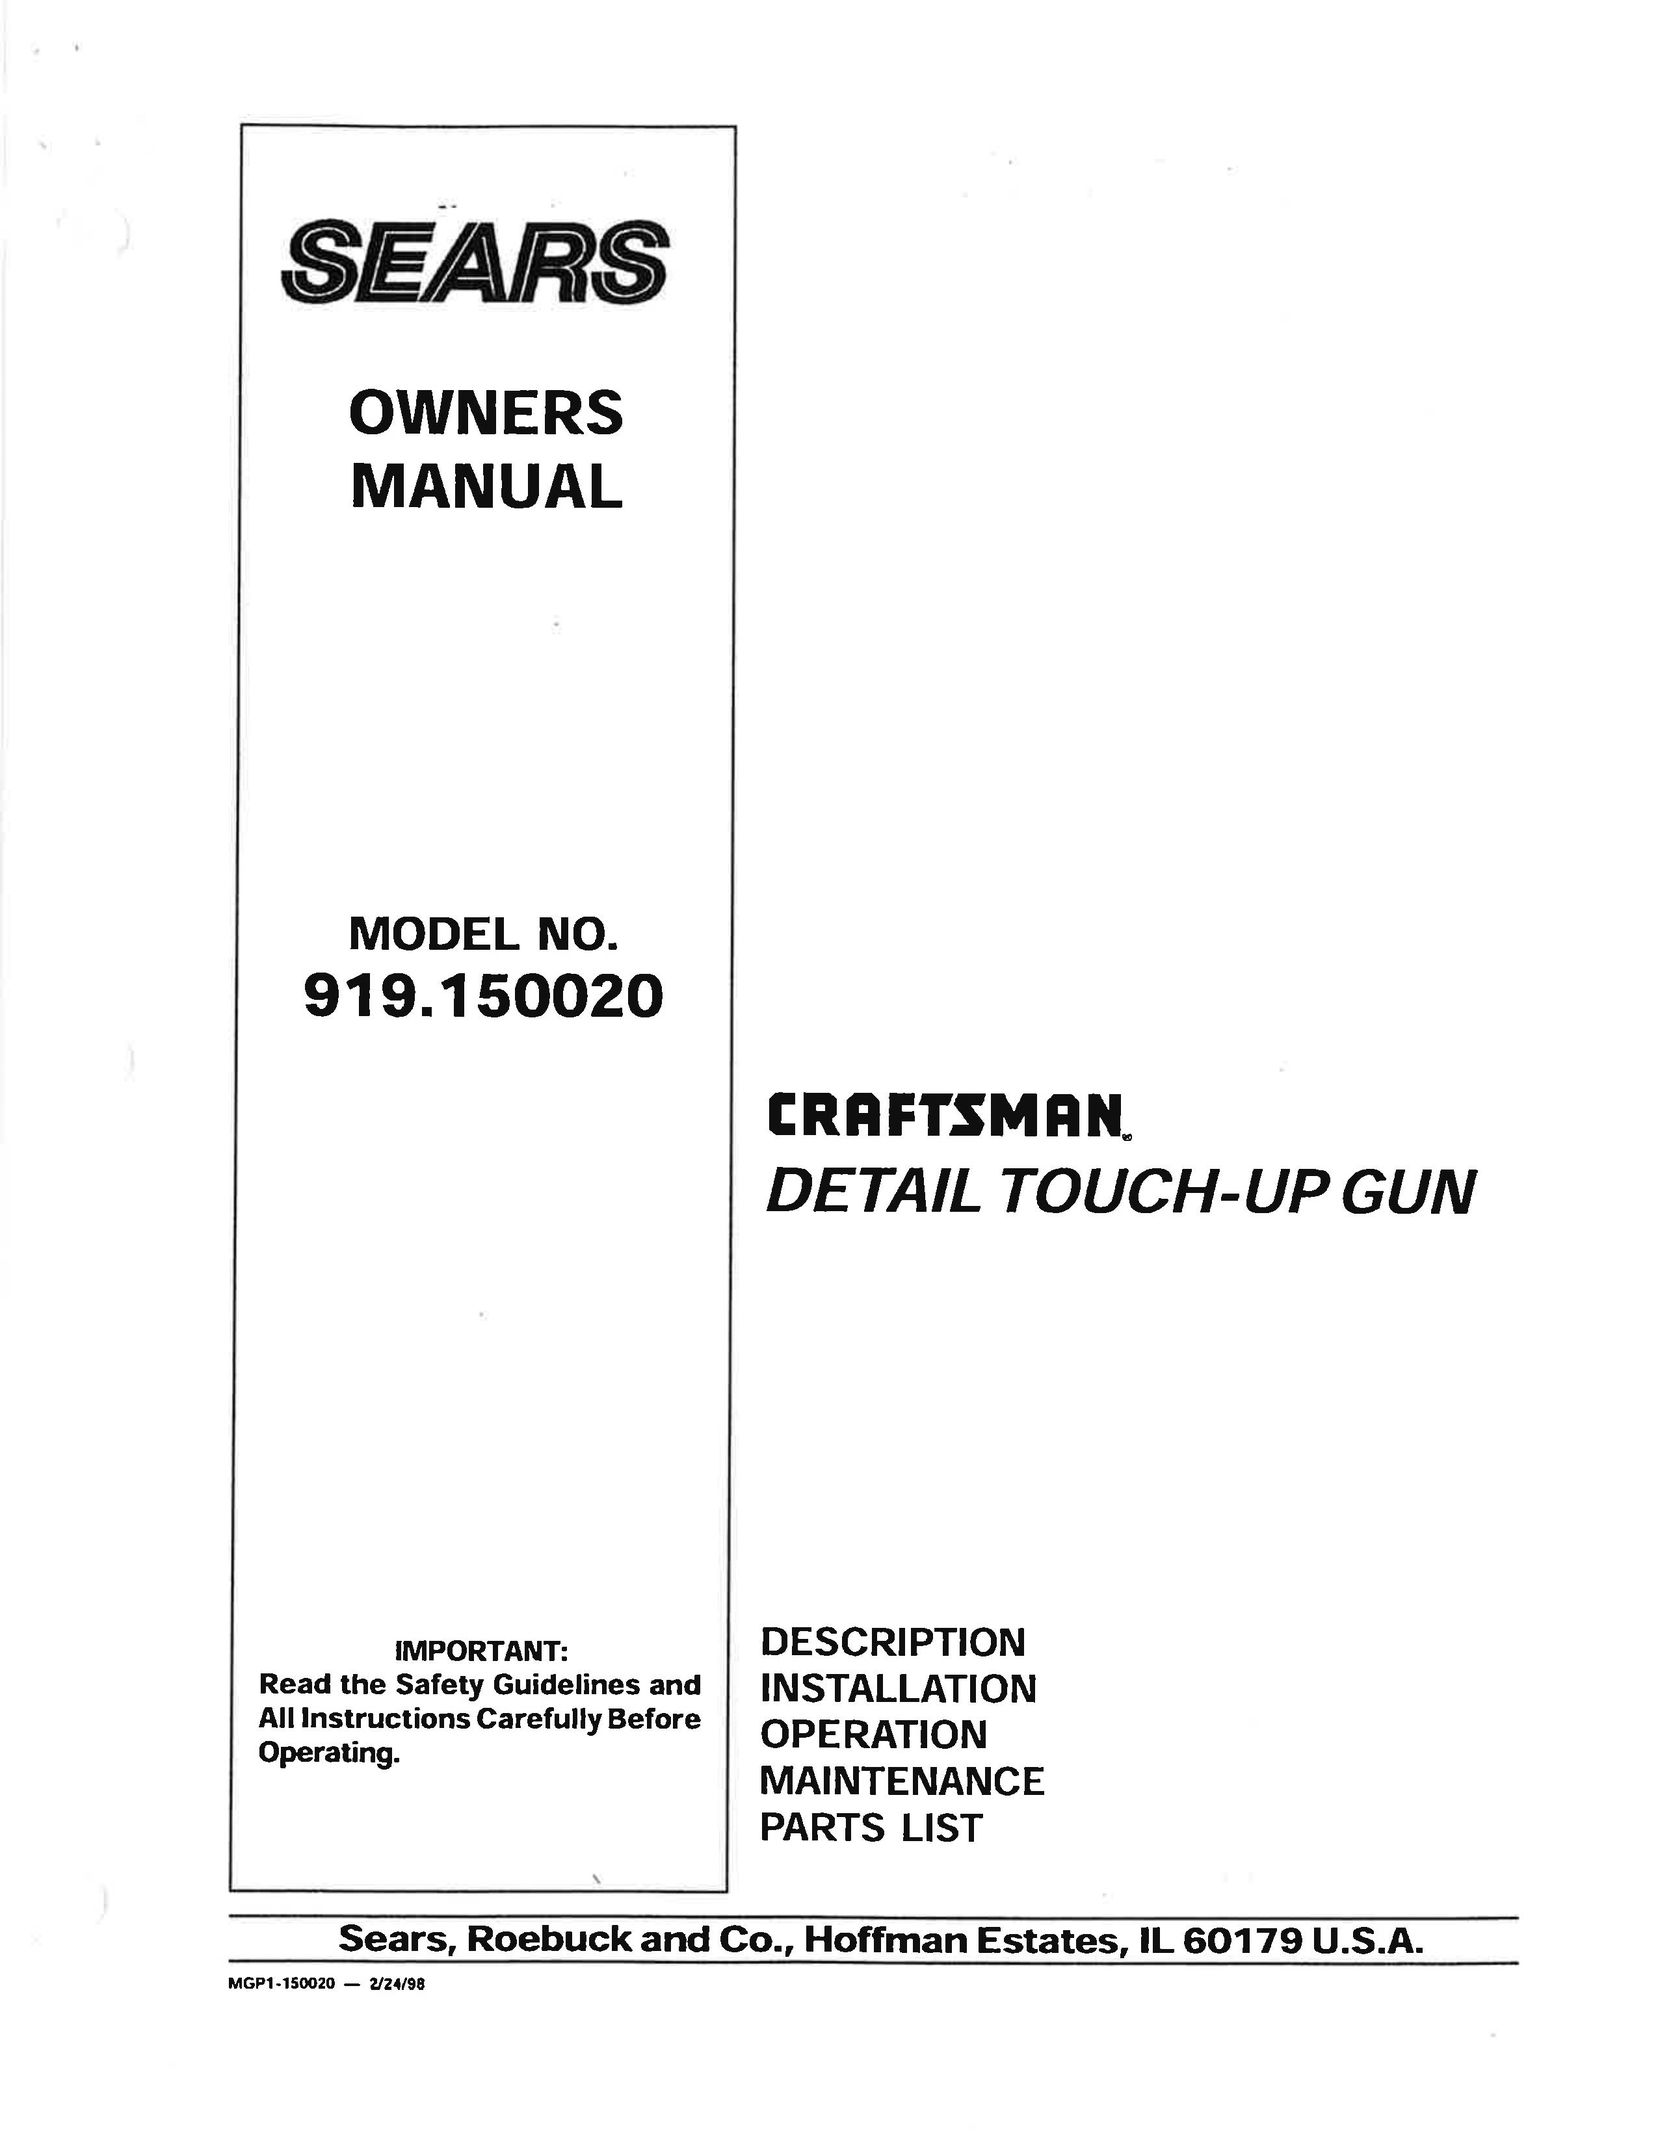 Craftsman 919.150020 Paint Sprayer User Manual